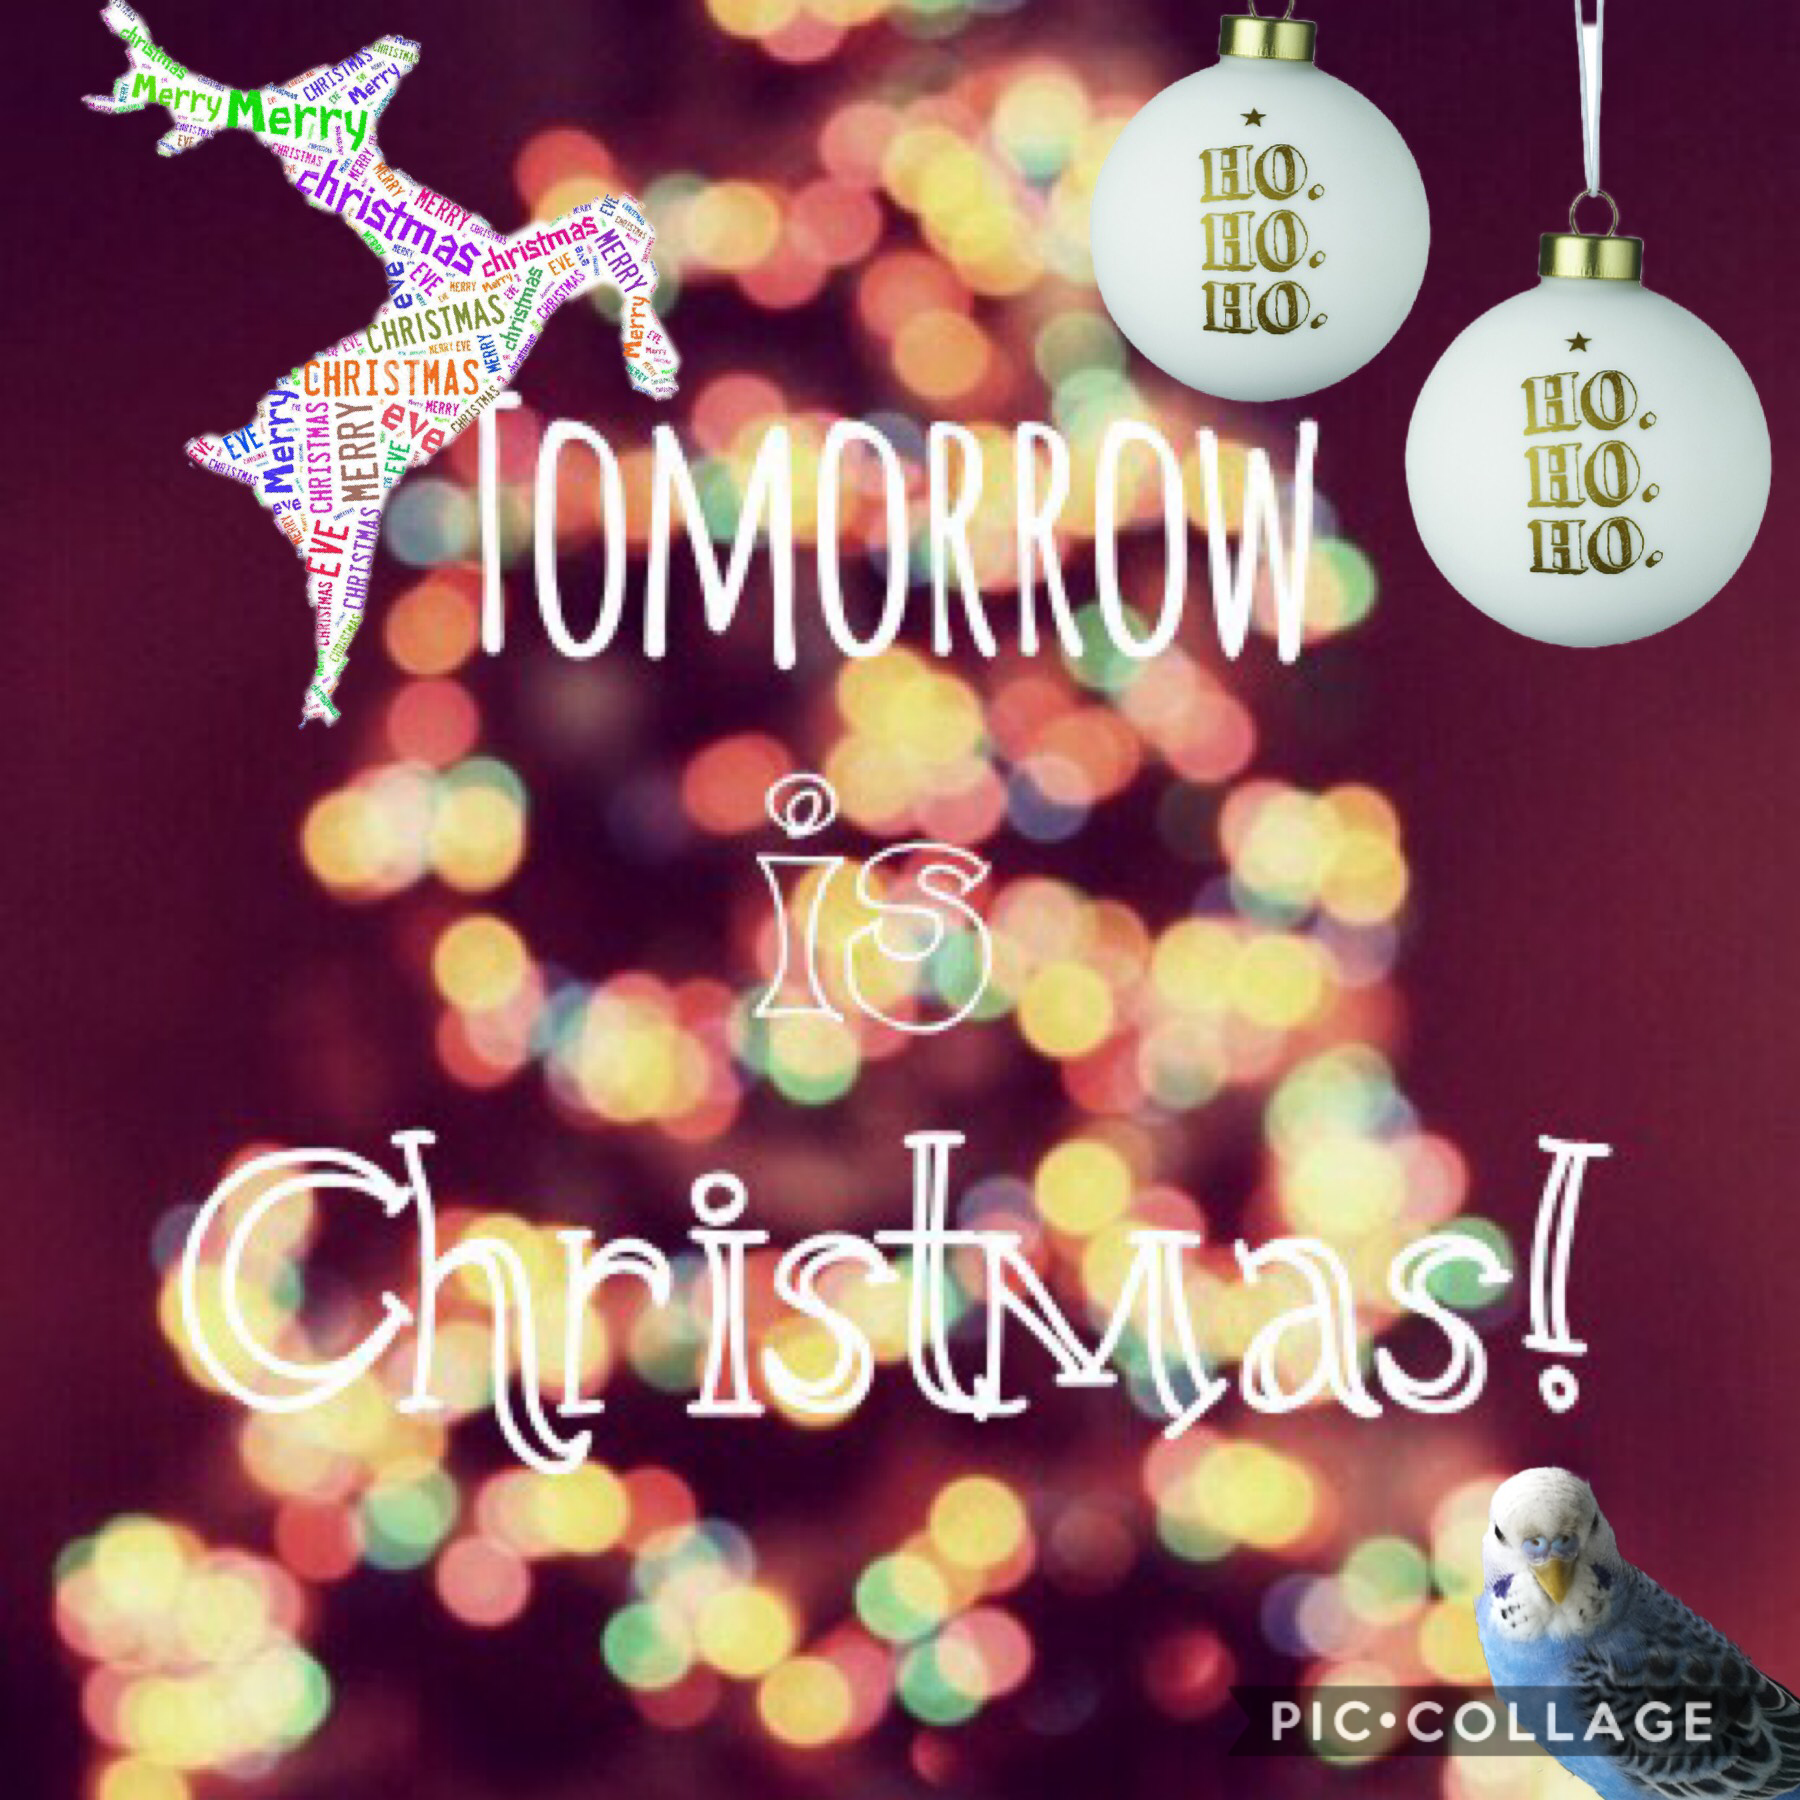 Tomorrow is CHRISTMAS!? Happy Christmas Totoro ( my bird ) and everyone!